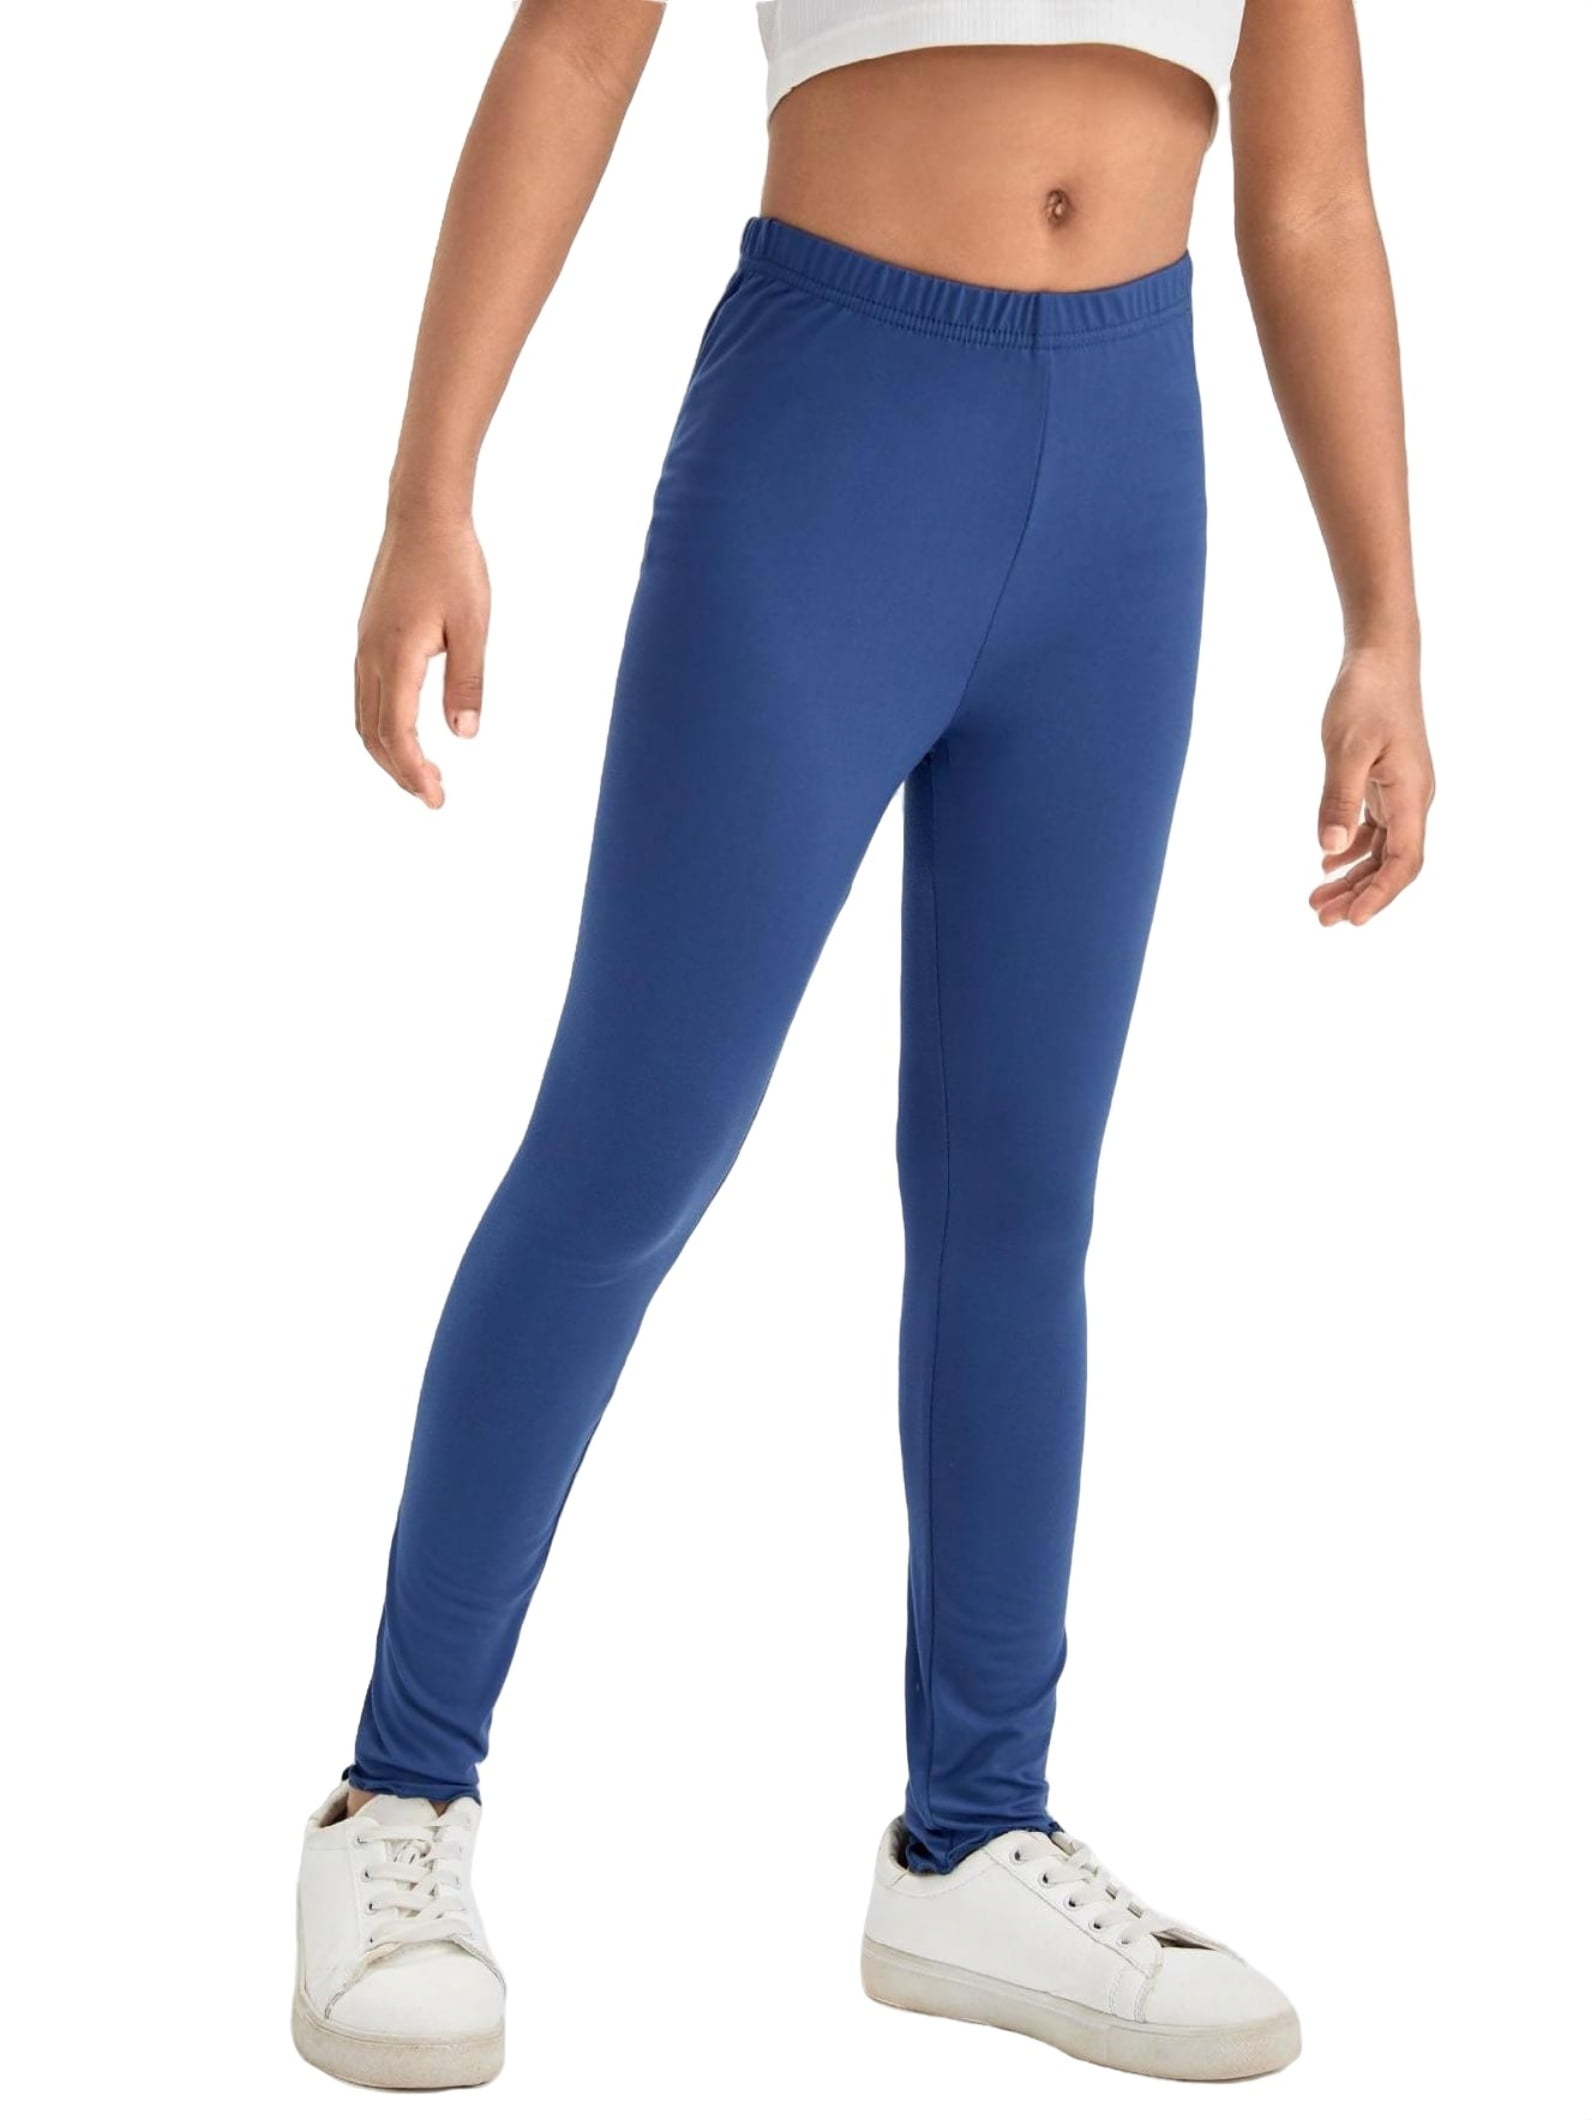 Plain Regular Blue Tween Girls Leggings (Tween Girls’） - Walmart.com